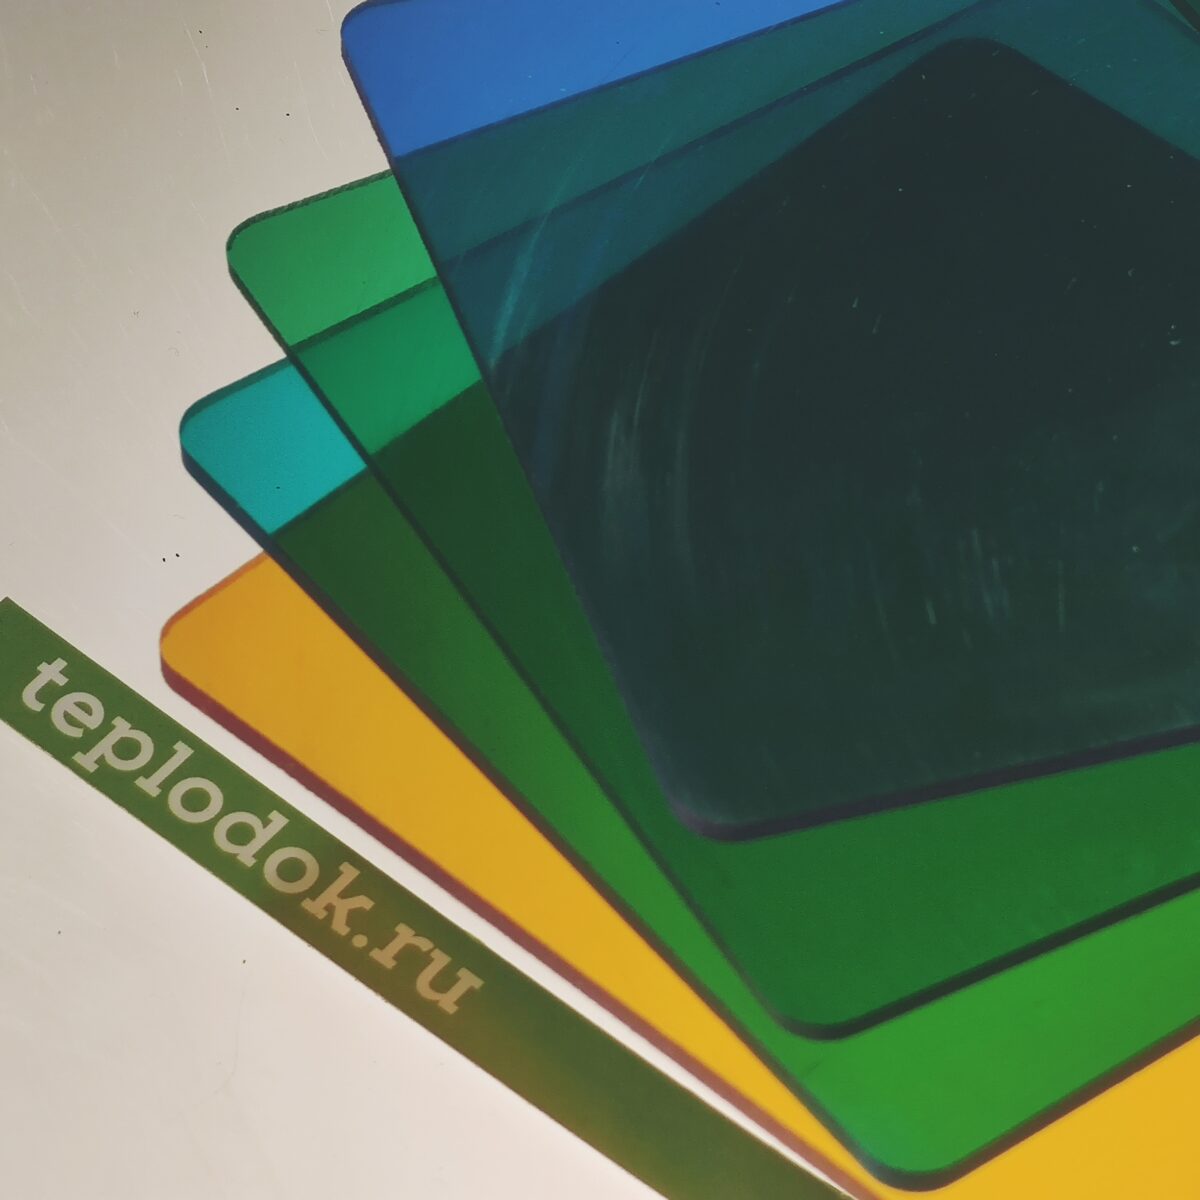 Монолитный поликарбонат 8 мм, зеленый, 2,05х3,05 м, Novattro